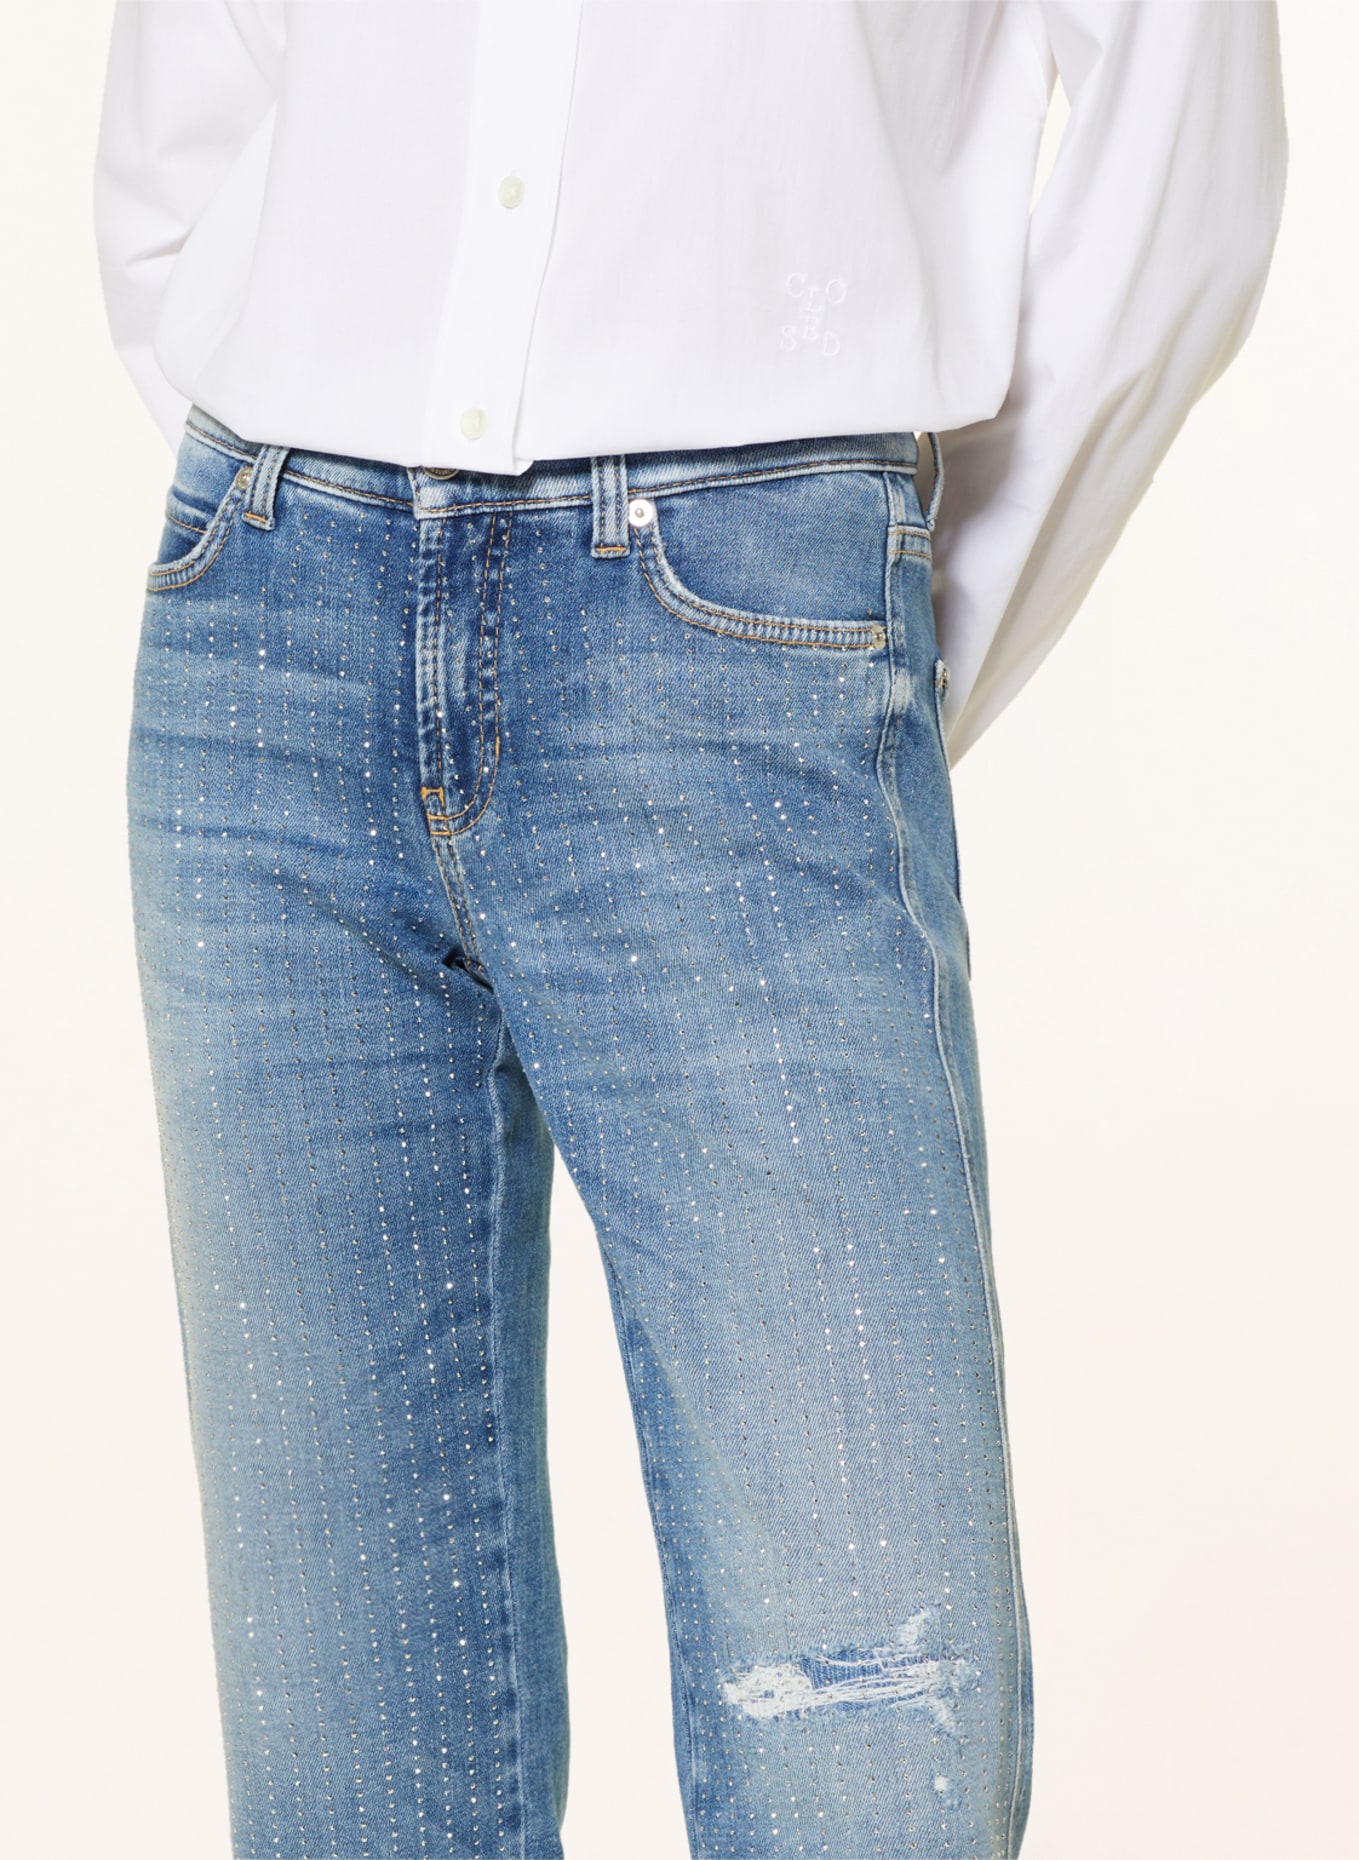 CAMBIO 7/8 jeans PARIS with decorative gems, Color: 5251 salty authentic contrast (Image 5)